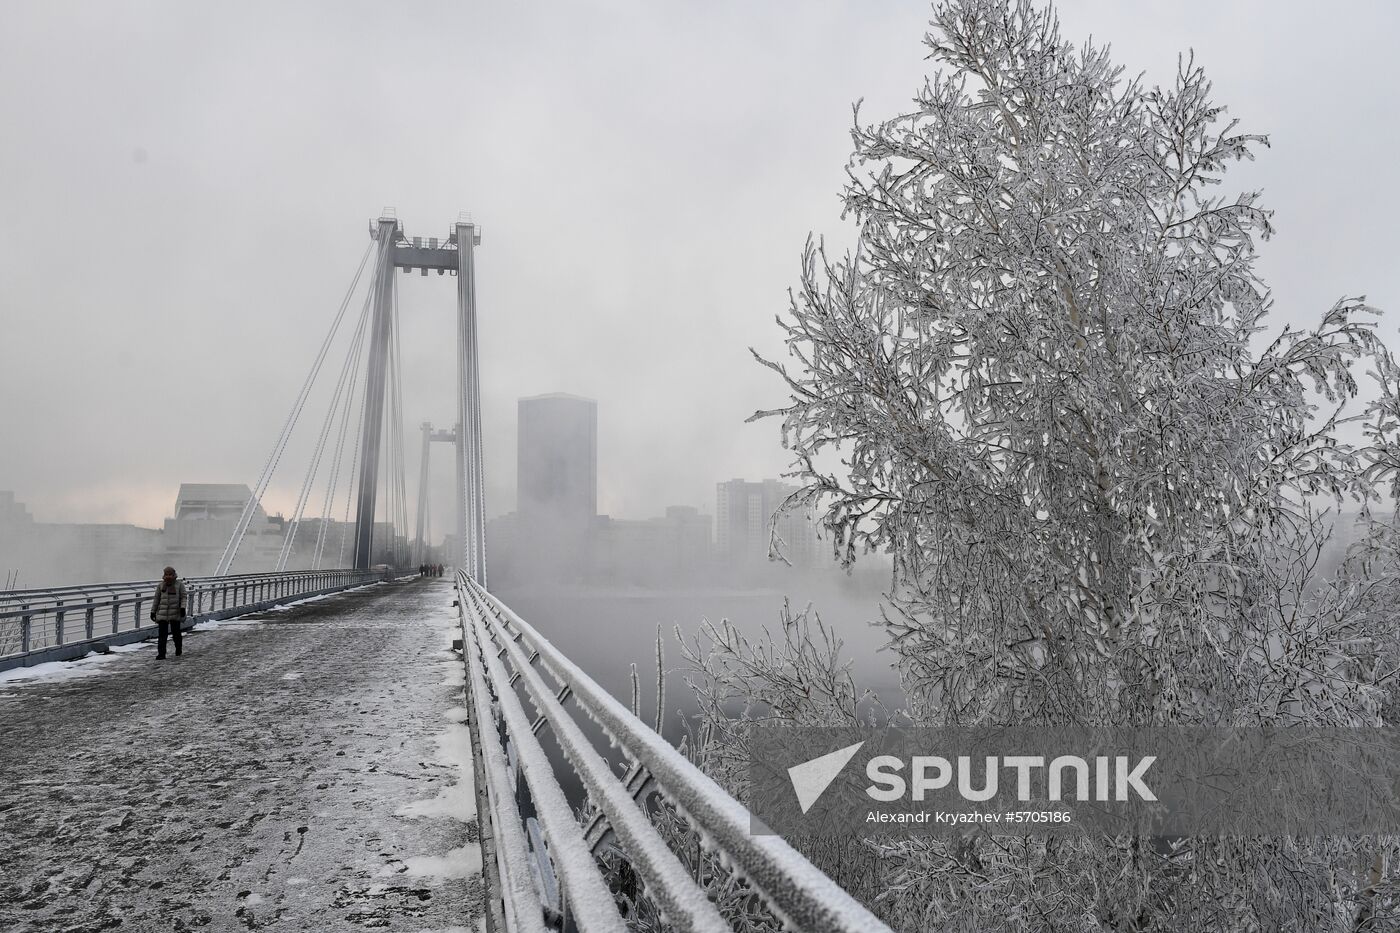 Subzero temperatures in Krasnoyarsk Territory